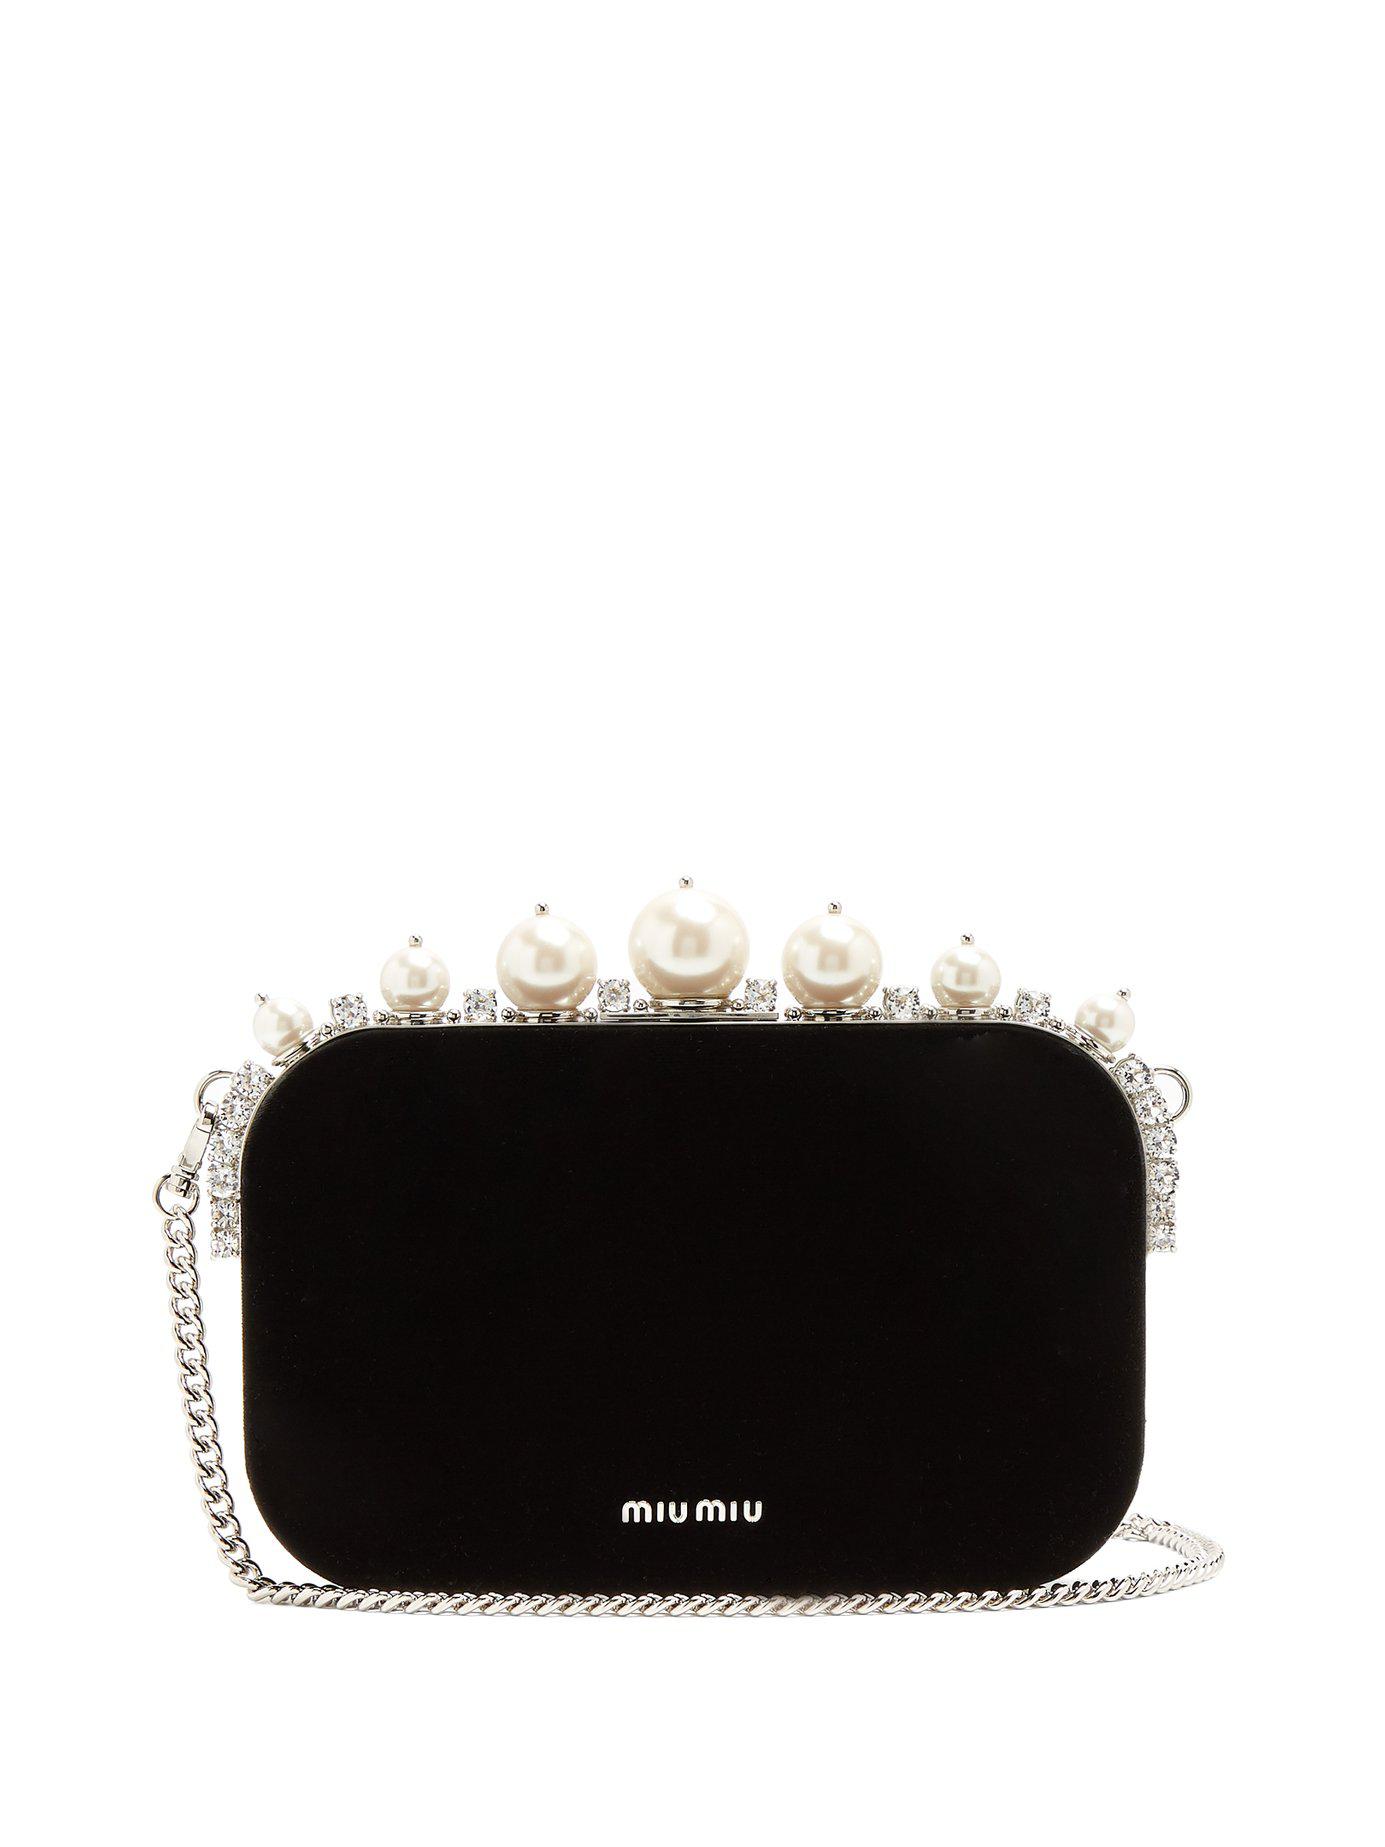 Miu Miu Pearl And Crystal Embellished Velvet Clutch in Black | Lyst